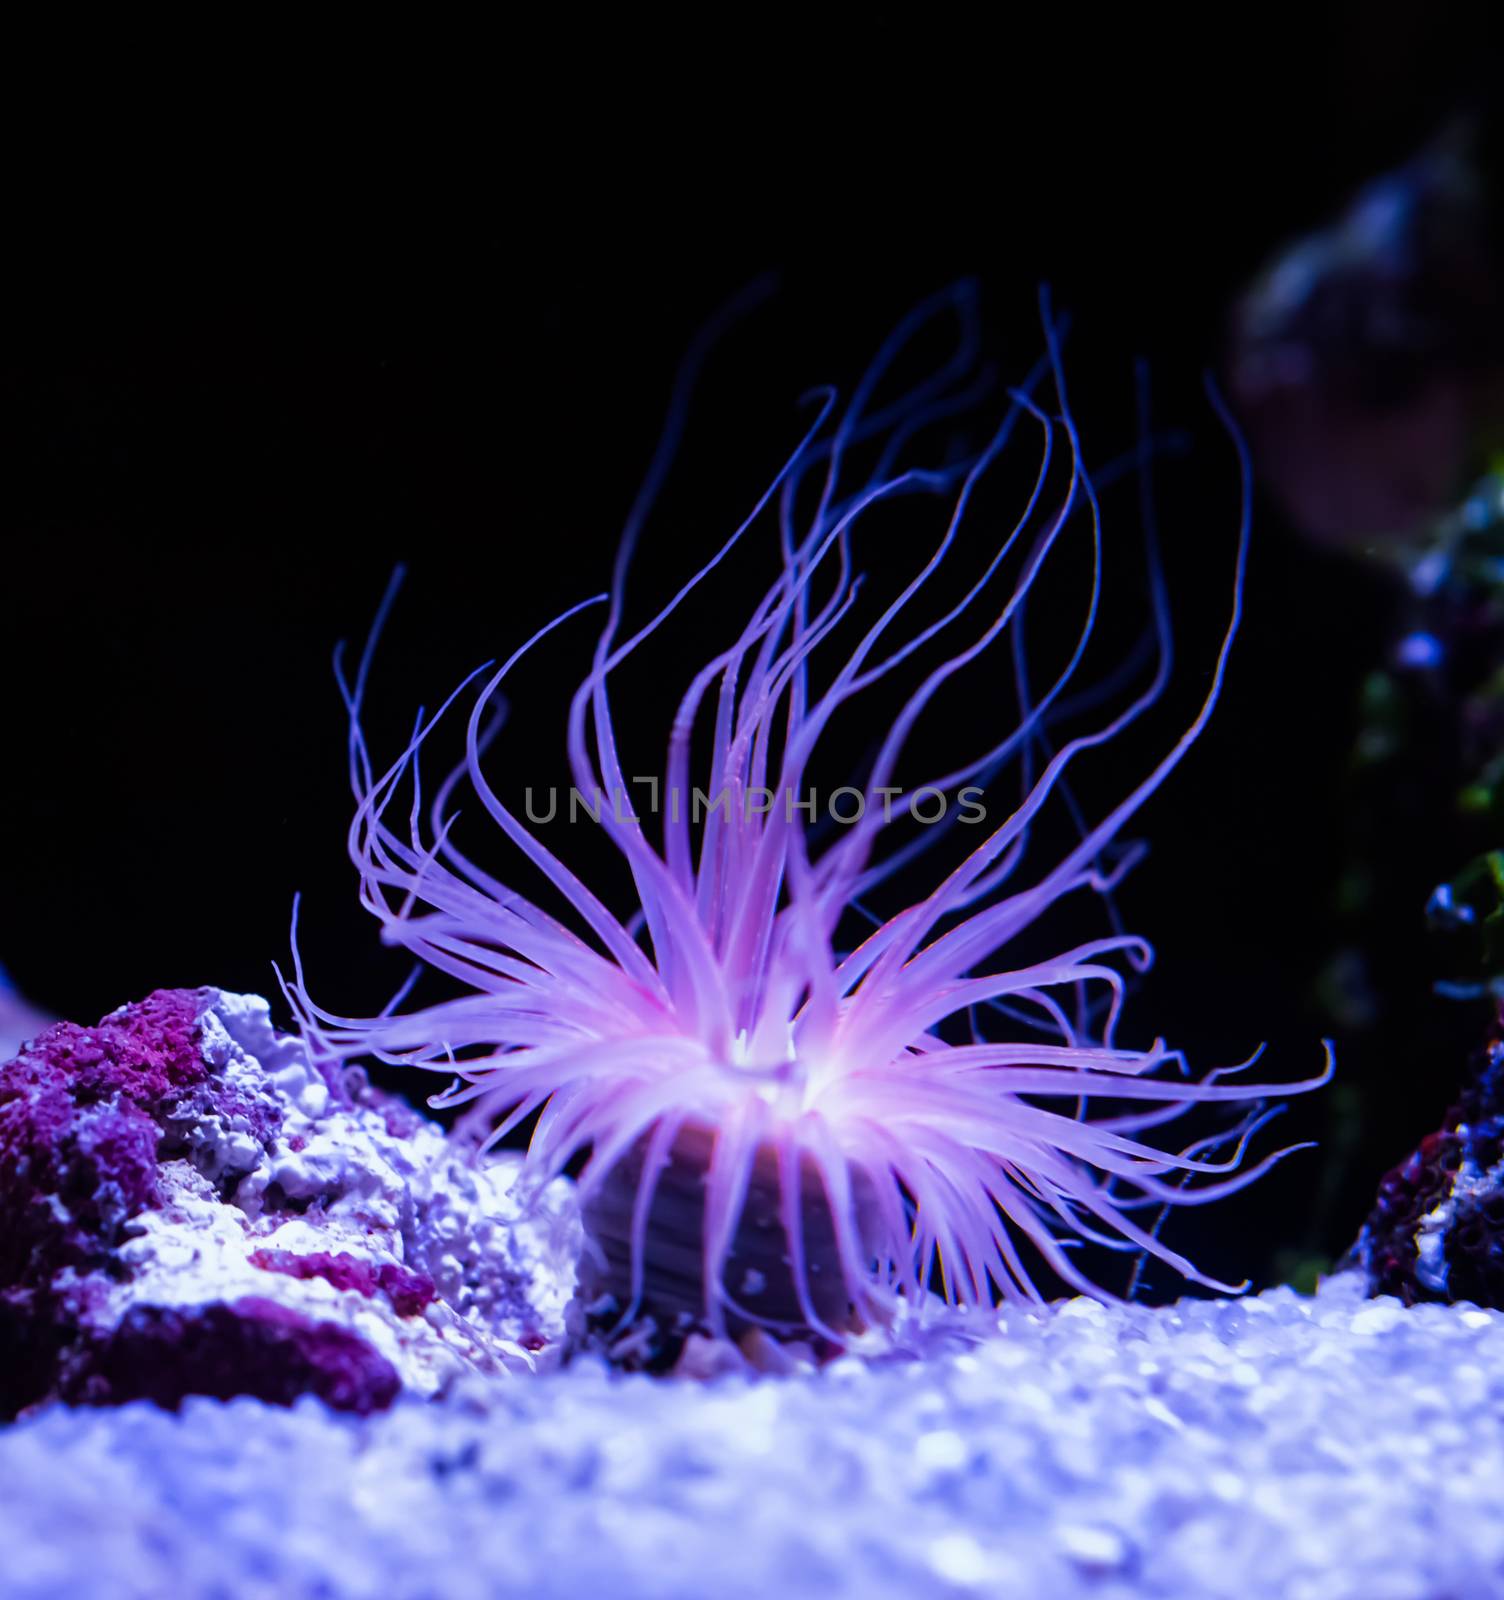 beautiful sea anemone lighting up in purple blue and pink vibrant colors aquatic underwater ocean animal plant by charlottebleijenberg